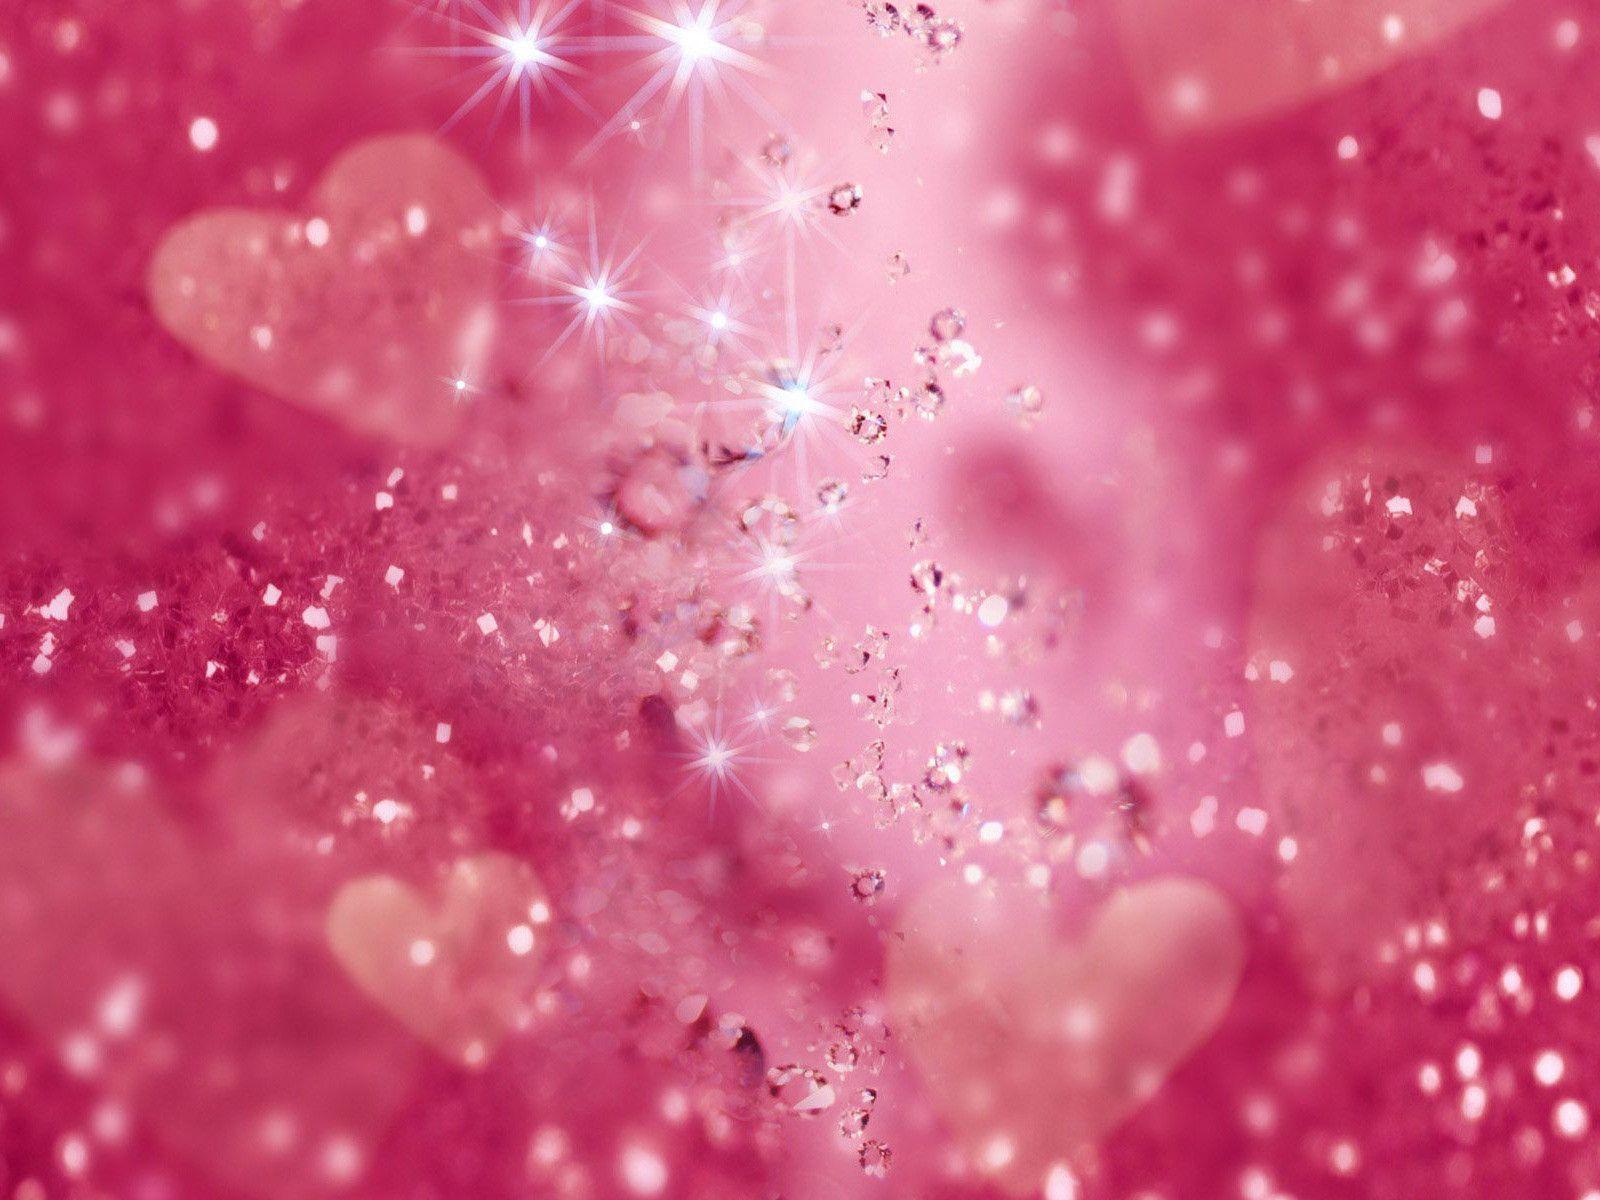 Pink Background Desktop. Piccry.com: Picture Idea Gallery